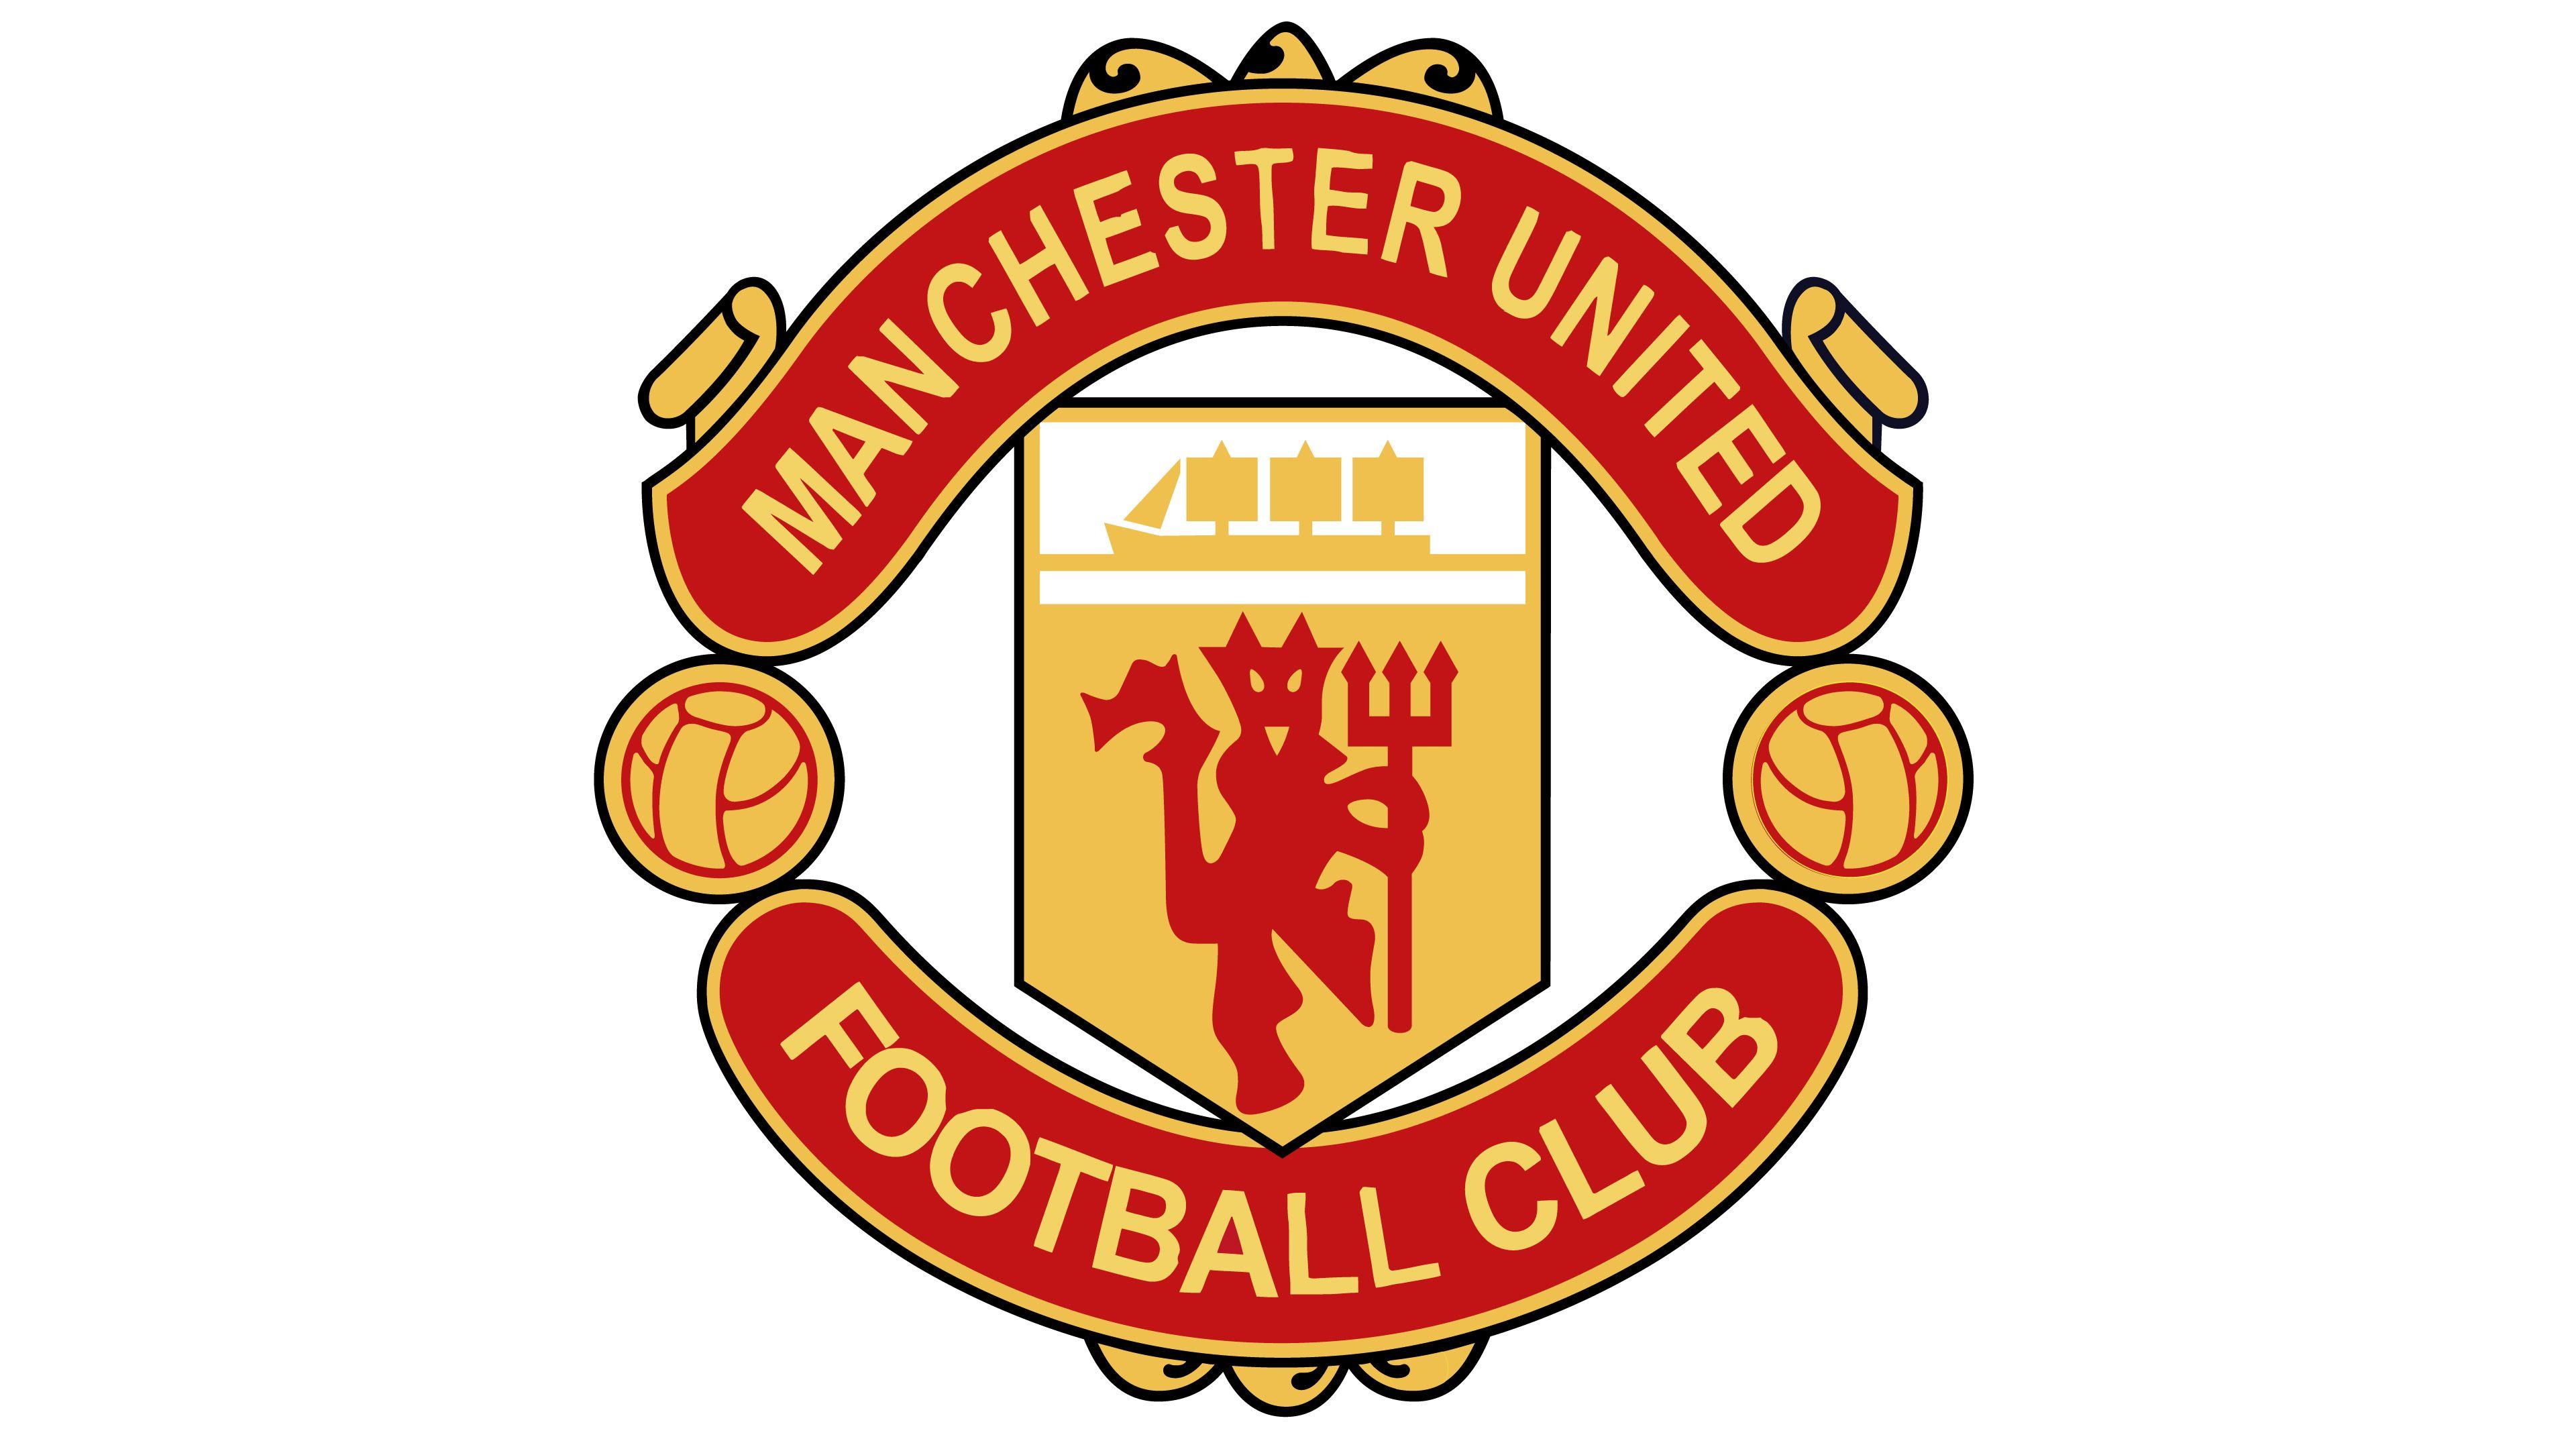 United Circle Logo - Manchester United logo - Interesting History Team Name and emblem